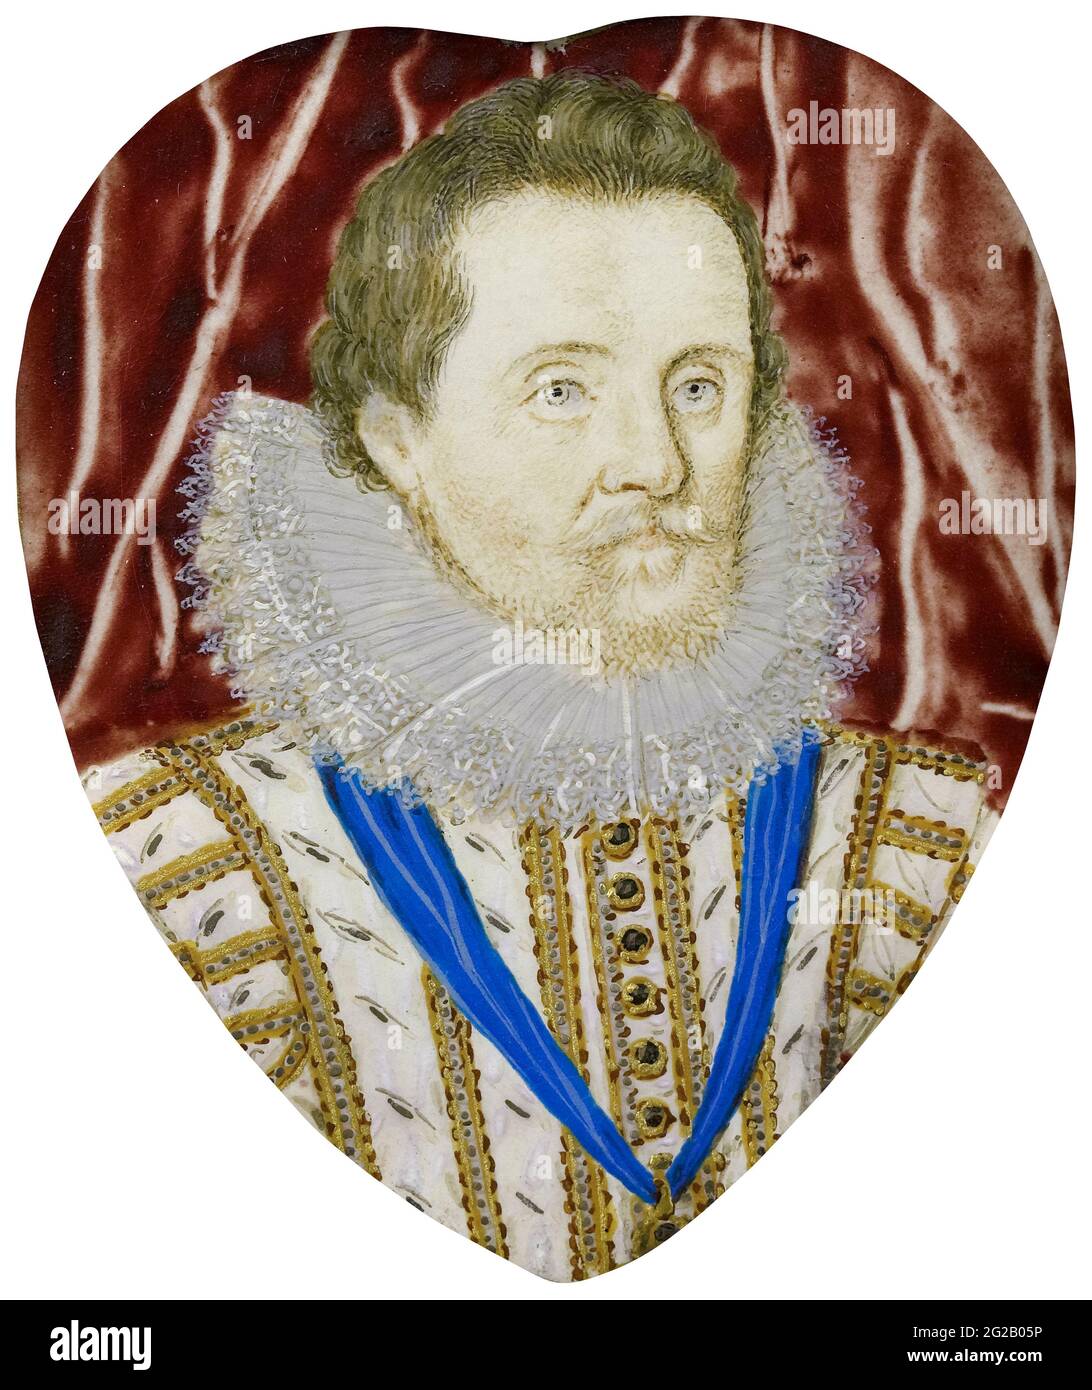 King James I of England (James VI of Scotland), James Charles Stuart, (1566-1625), portrait miniature by Lawrence Hilliard, 1600-1625 Stock Photo